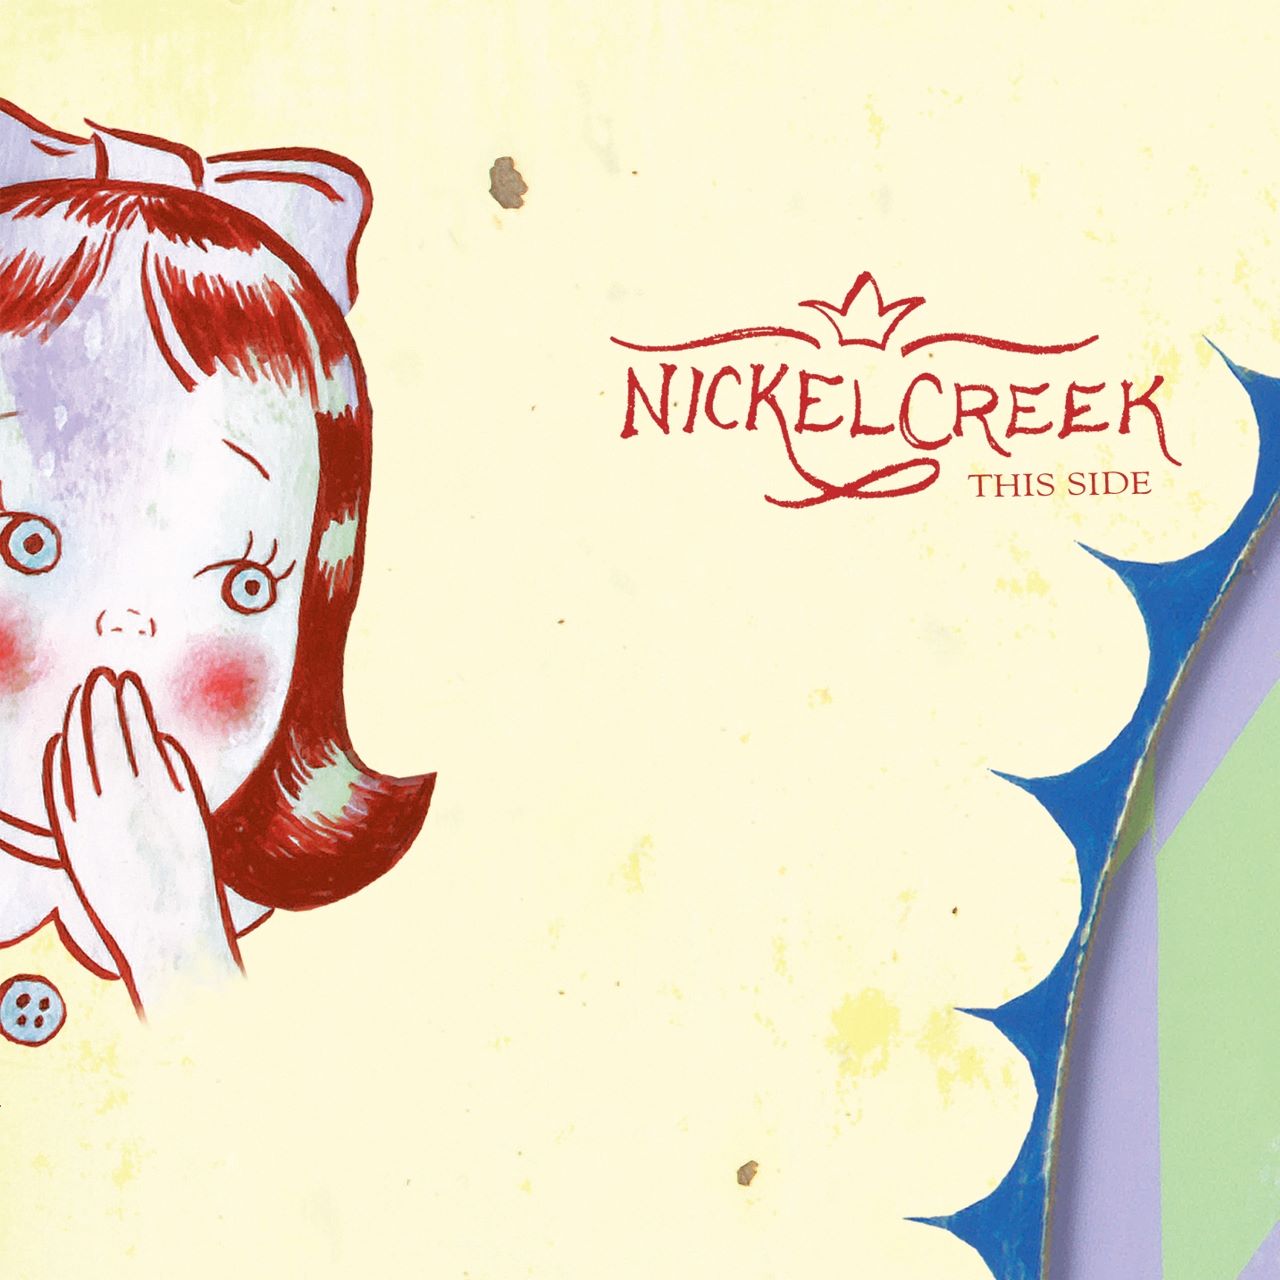 Nickel Creek - This Side cover album